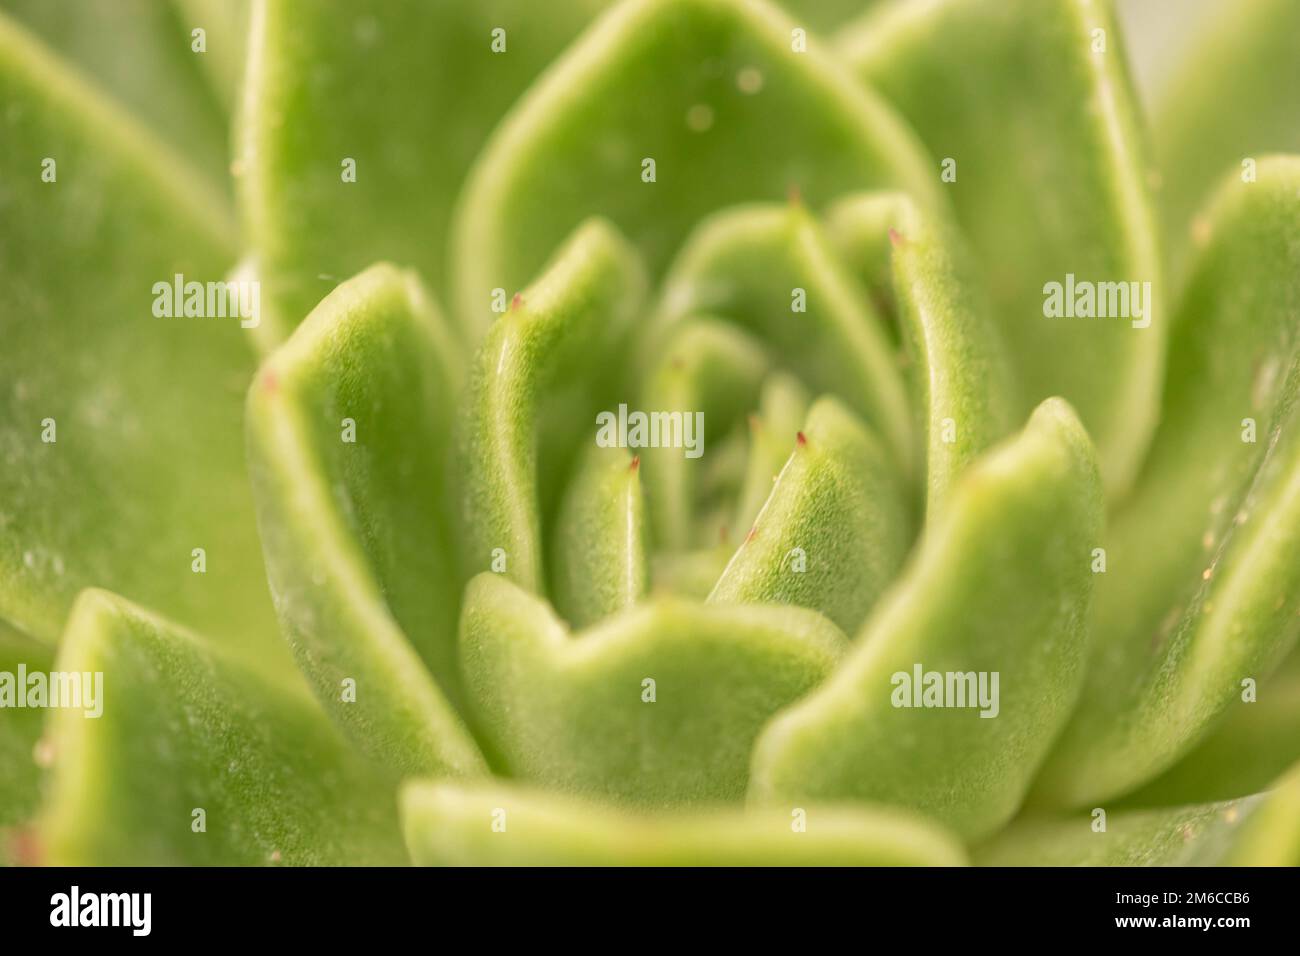 Echeveria secunda species texture and close up view. Stock Photo